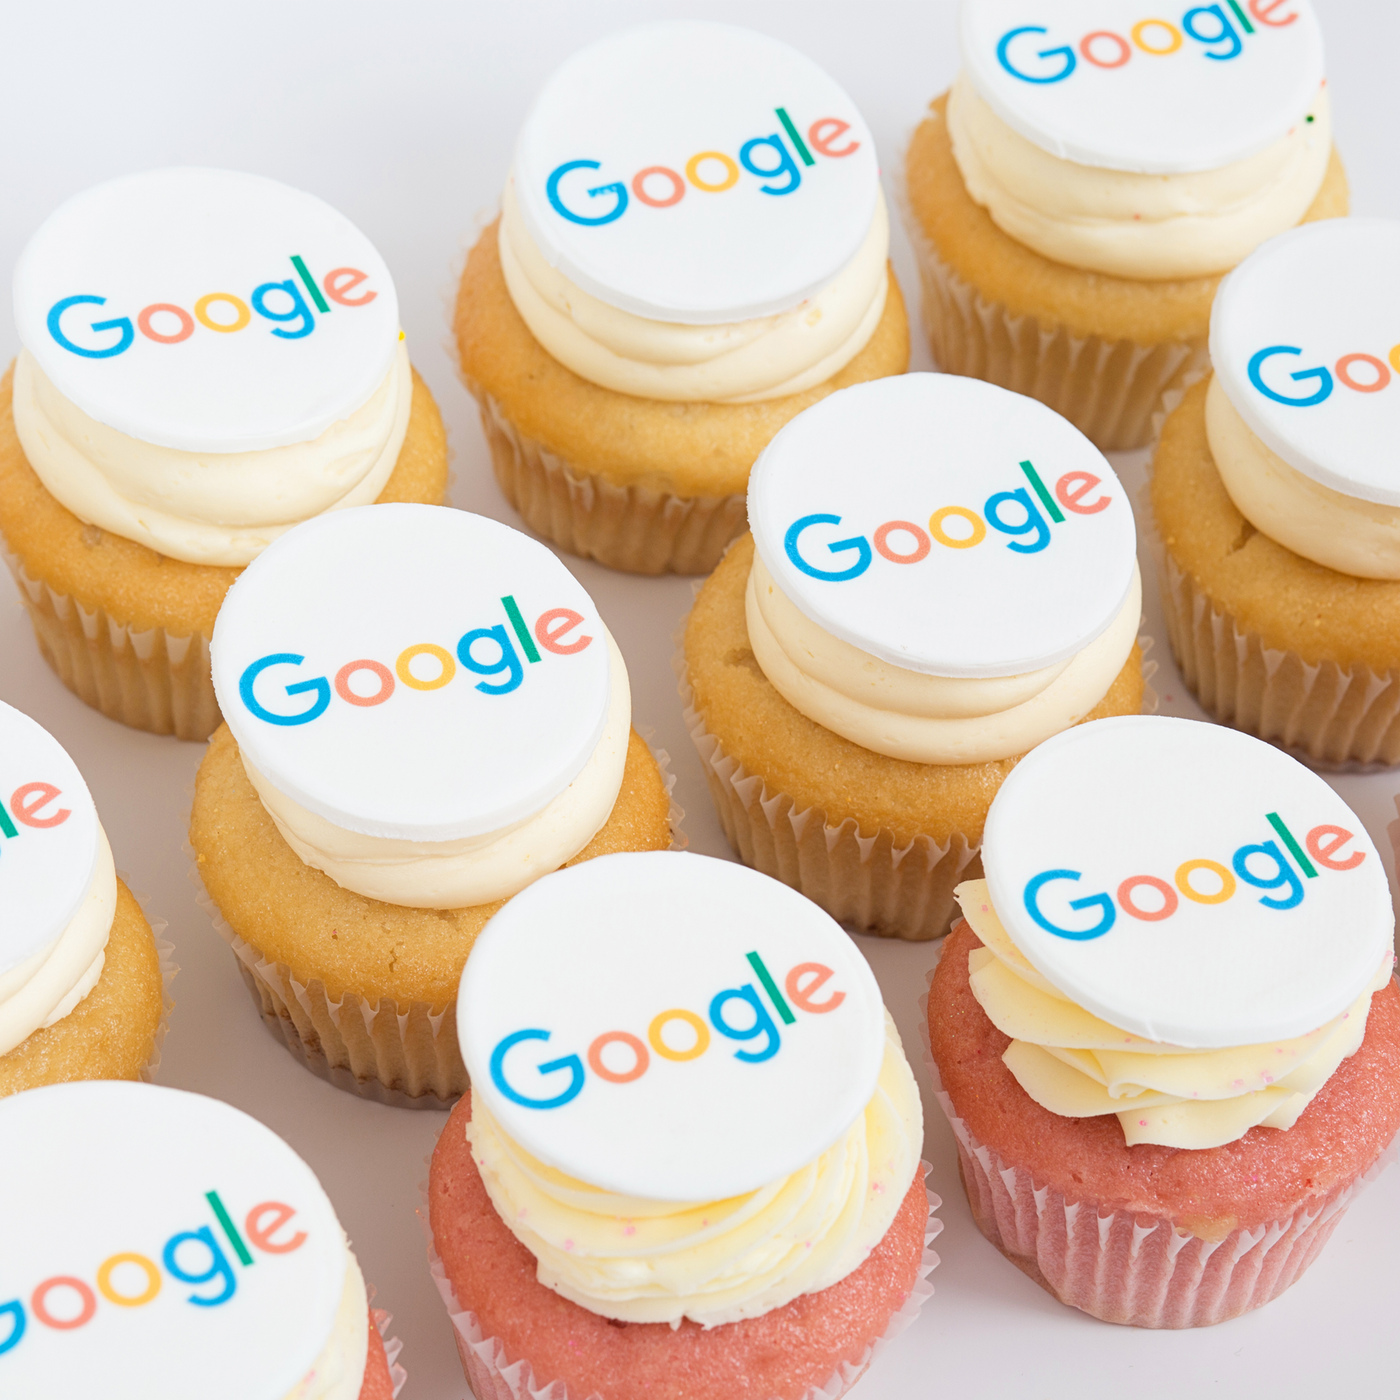 corporate logo cupcakes - google 